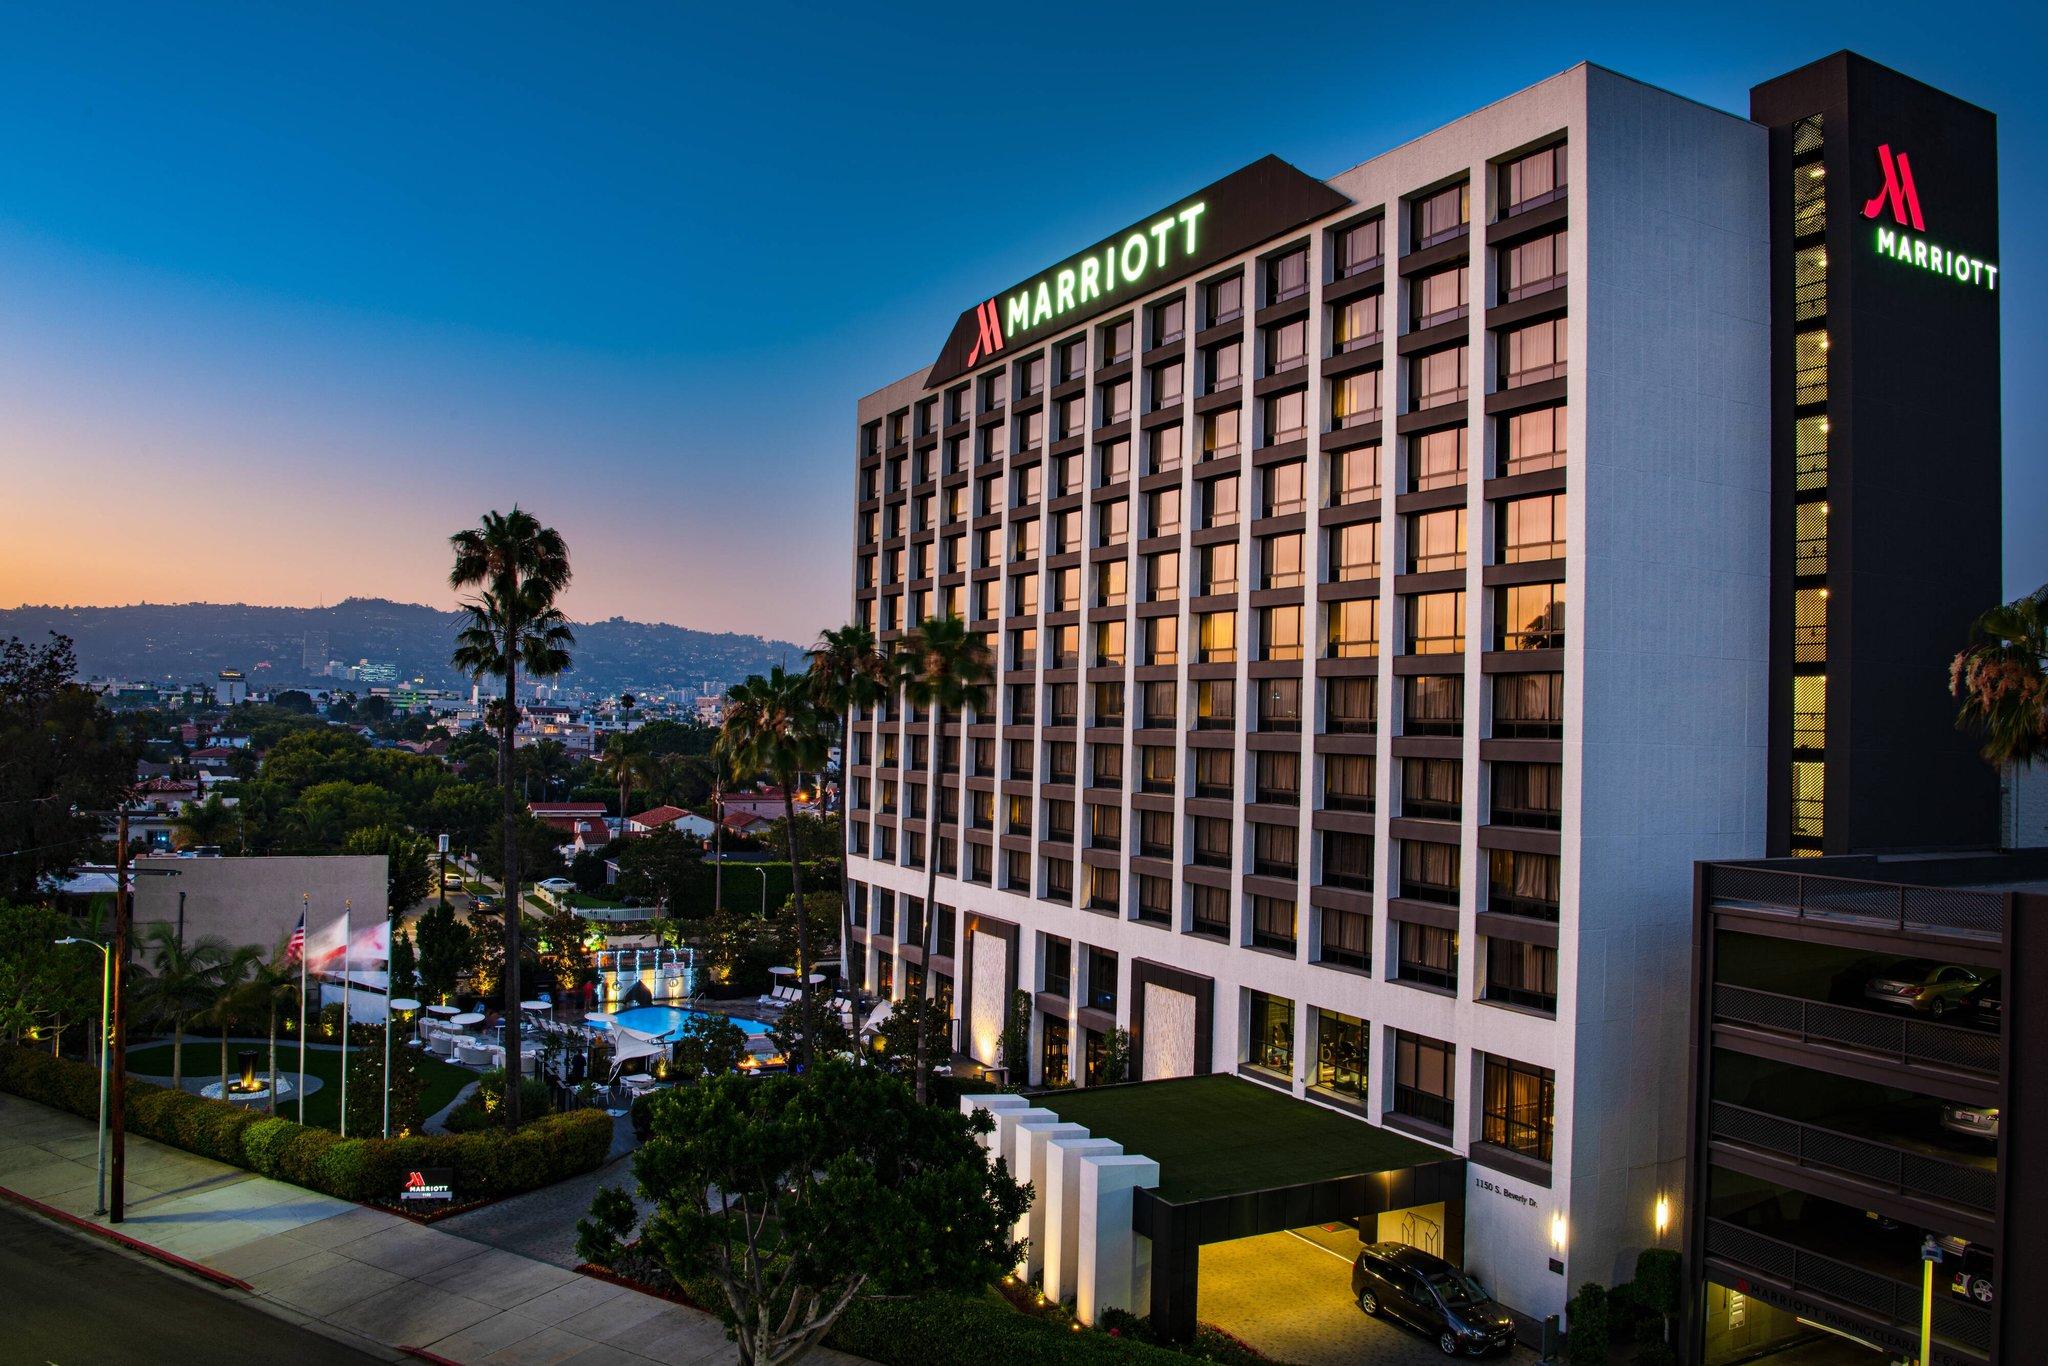 Beverly Hills Marriott in Los Angeles, CA